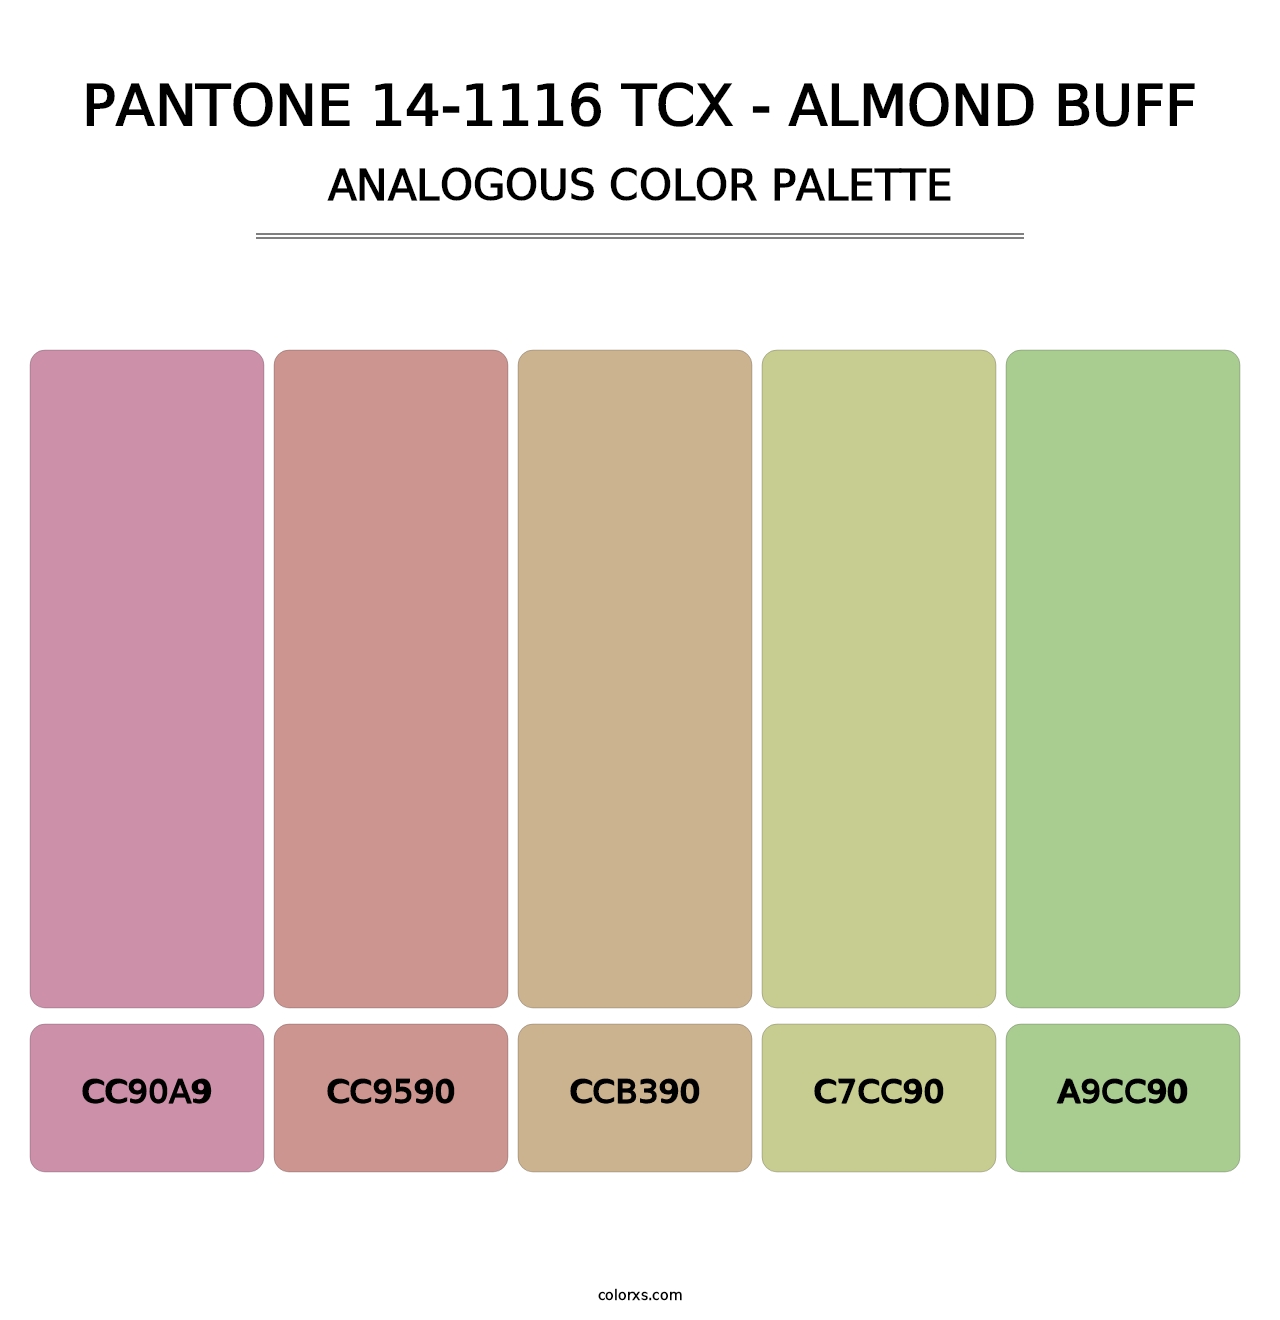 PANTONE 14-1116 TCX - Almond Buff - Analogous Color Palette